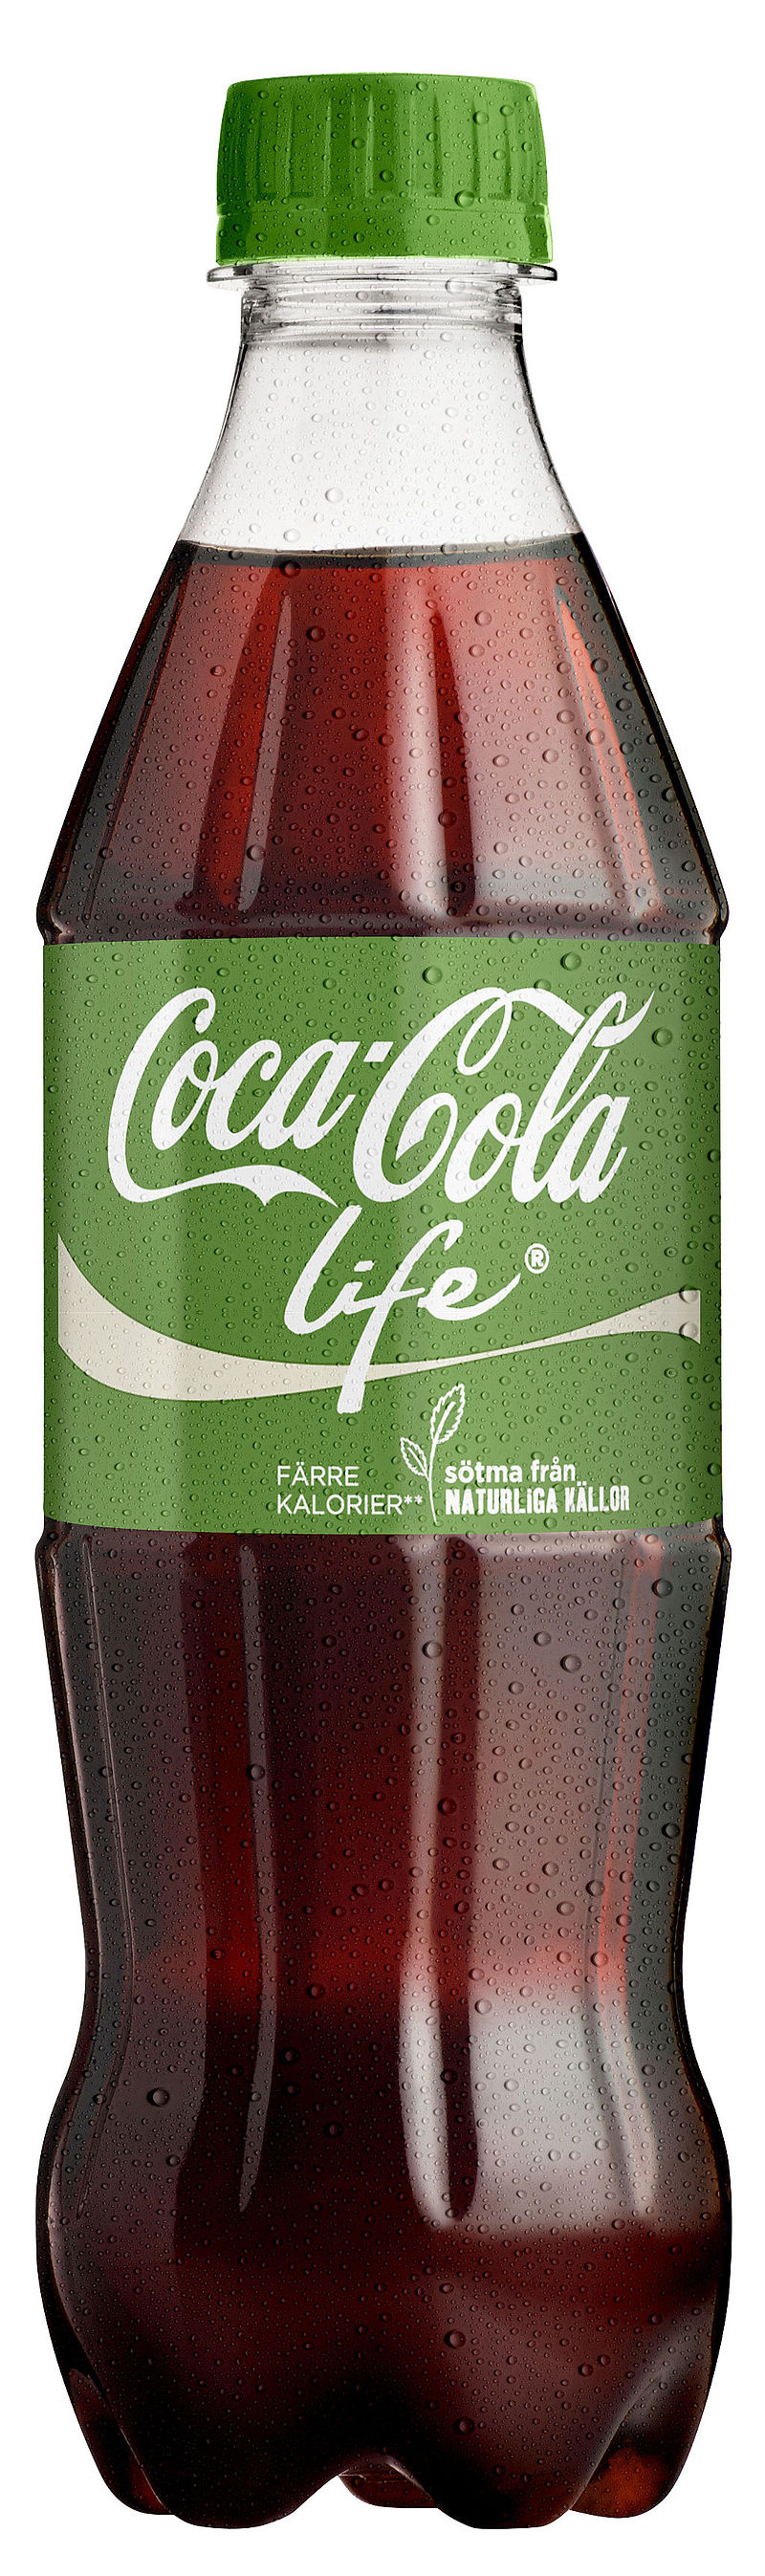 Coca Cola Life Bottle